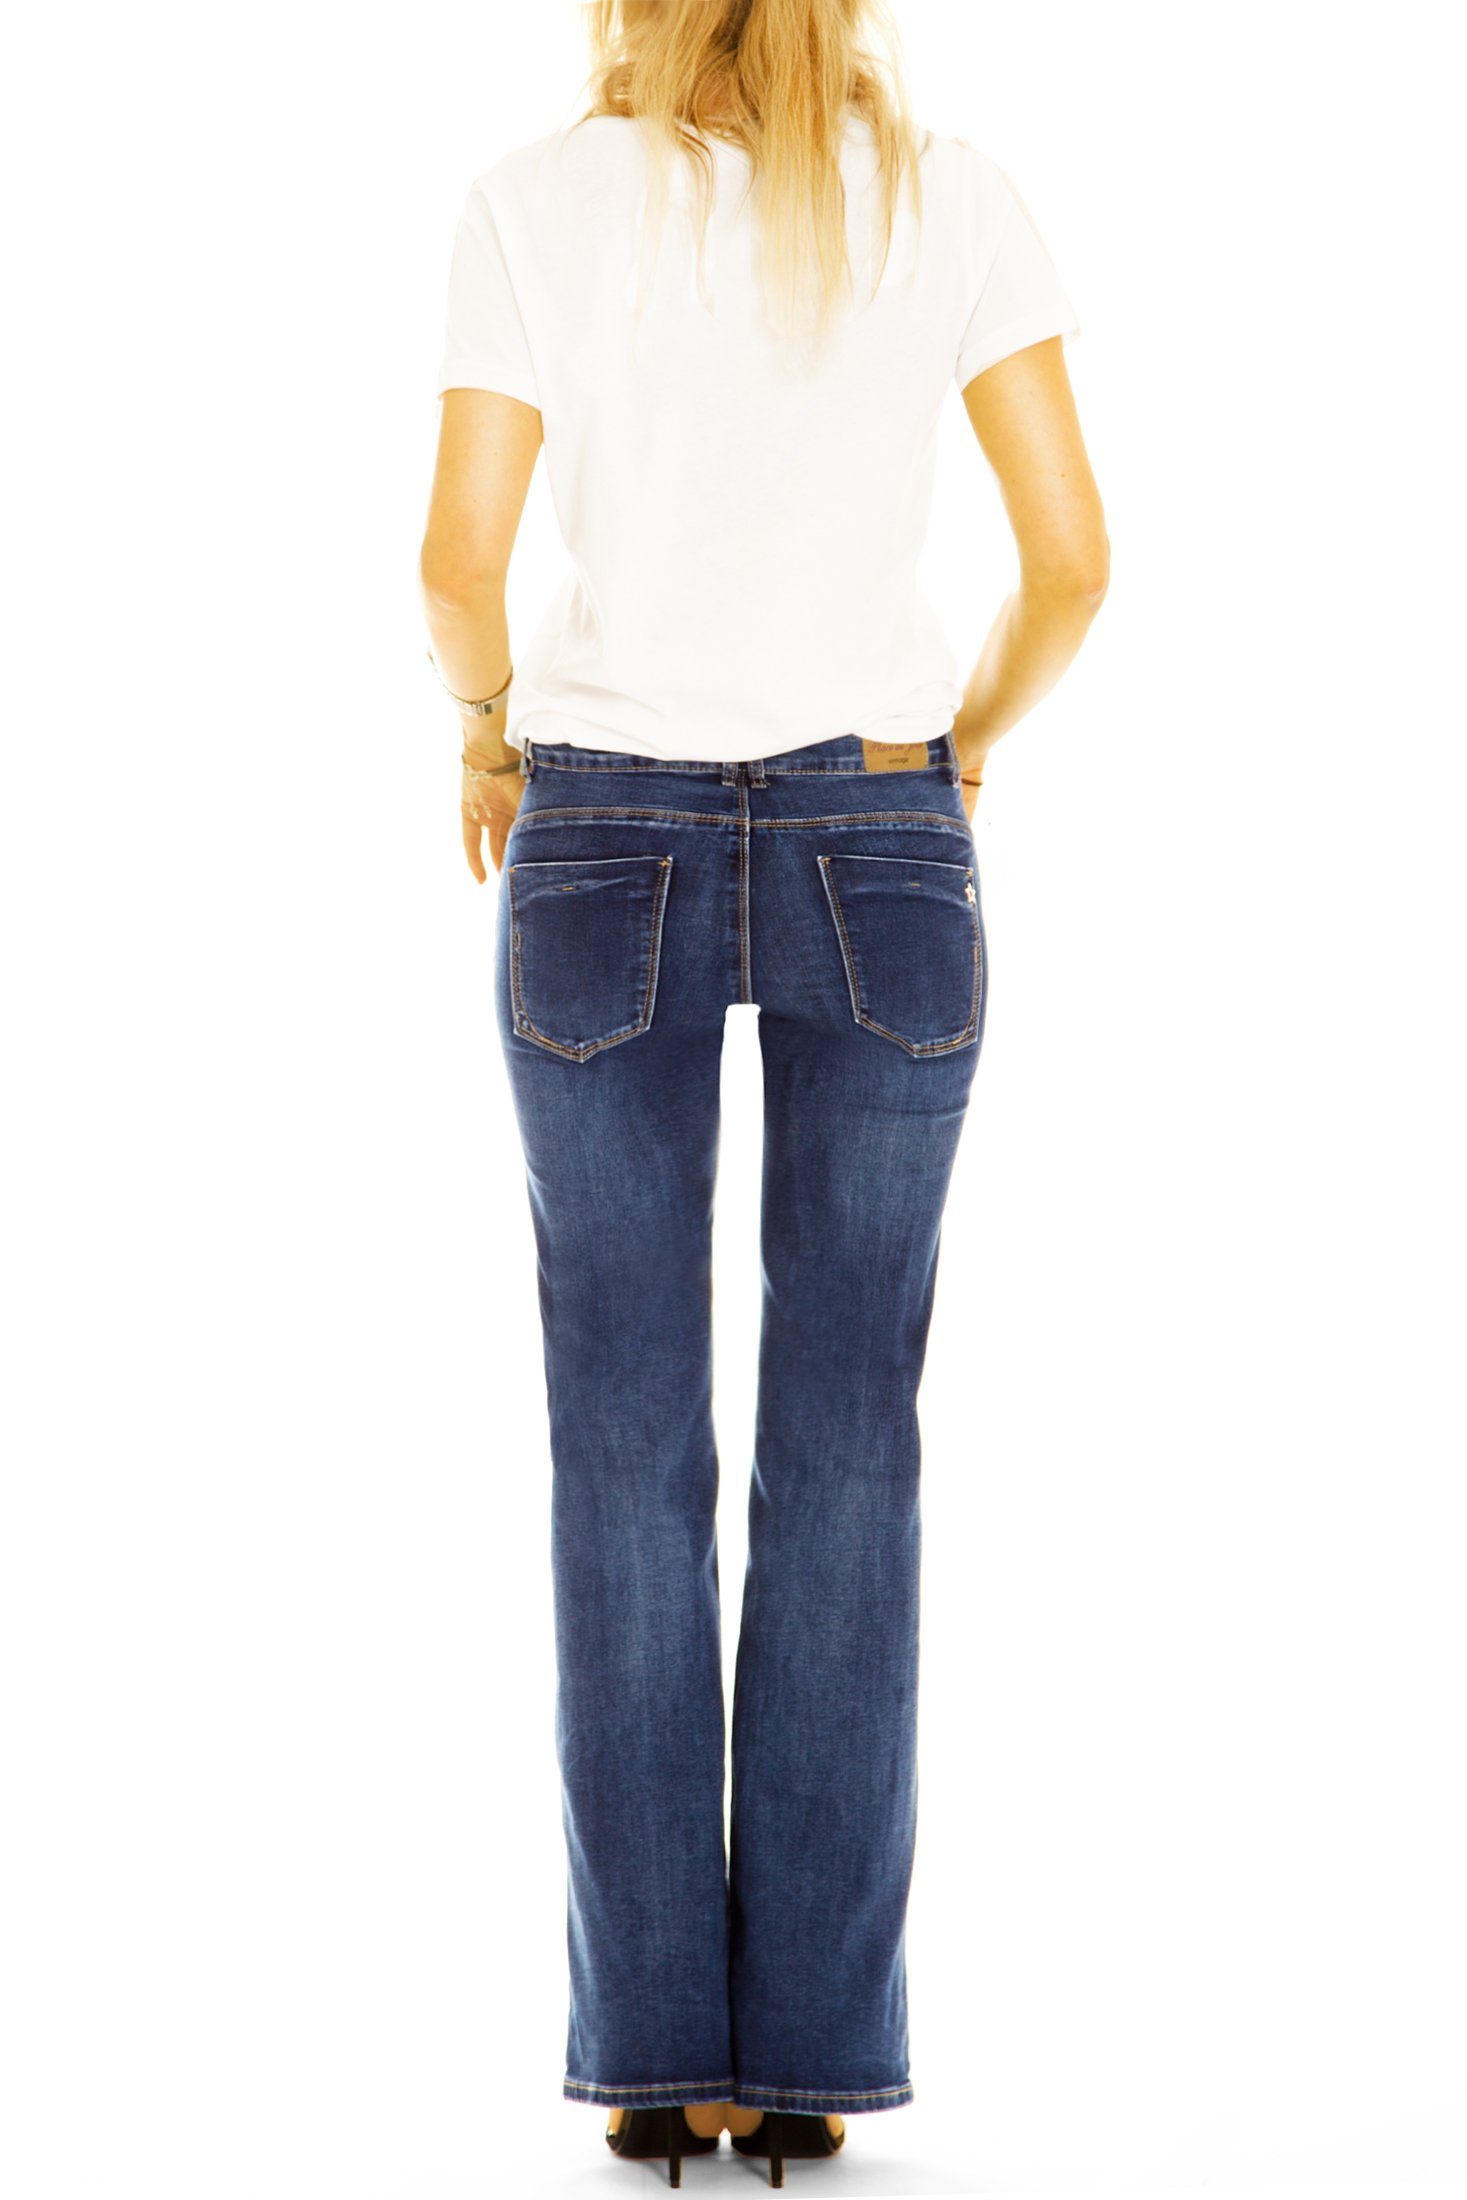 Damen Passform Medium mit j5e - Jeans Bootcut Hose - Bootcut-Jeans Stretch-Anteil, ausgestellter be styled 5-Pocket-Style Waist